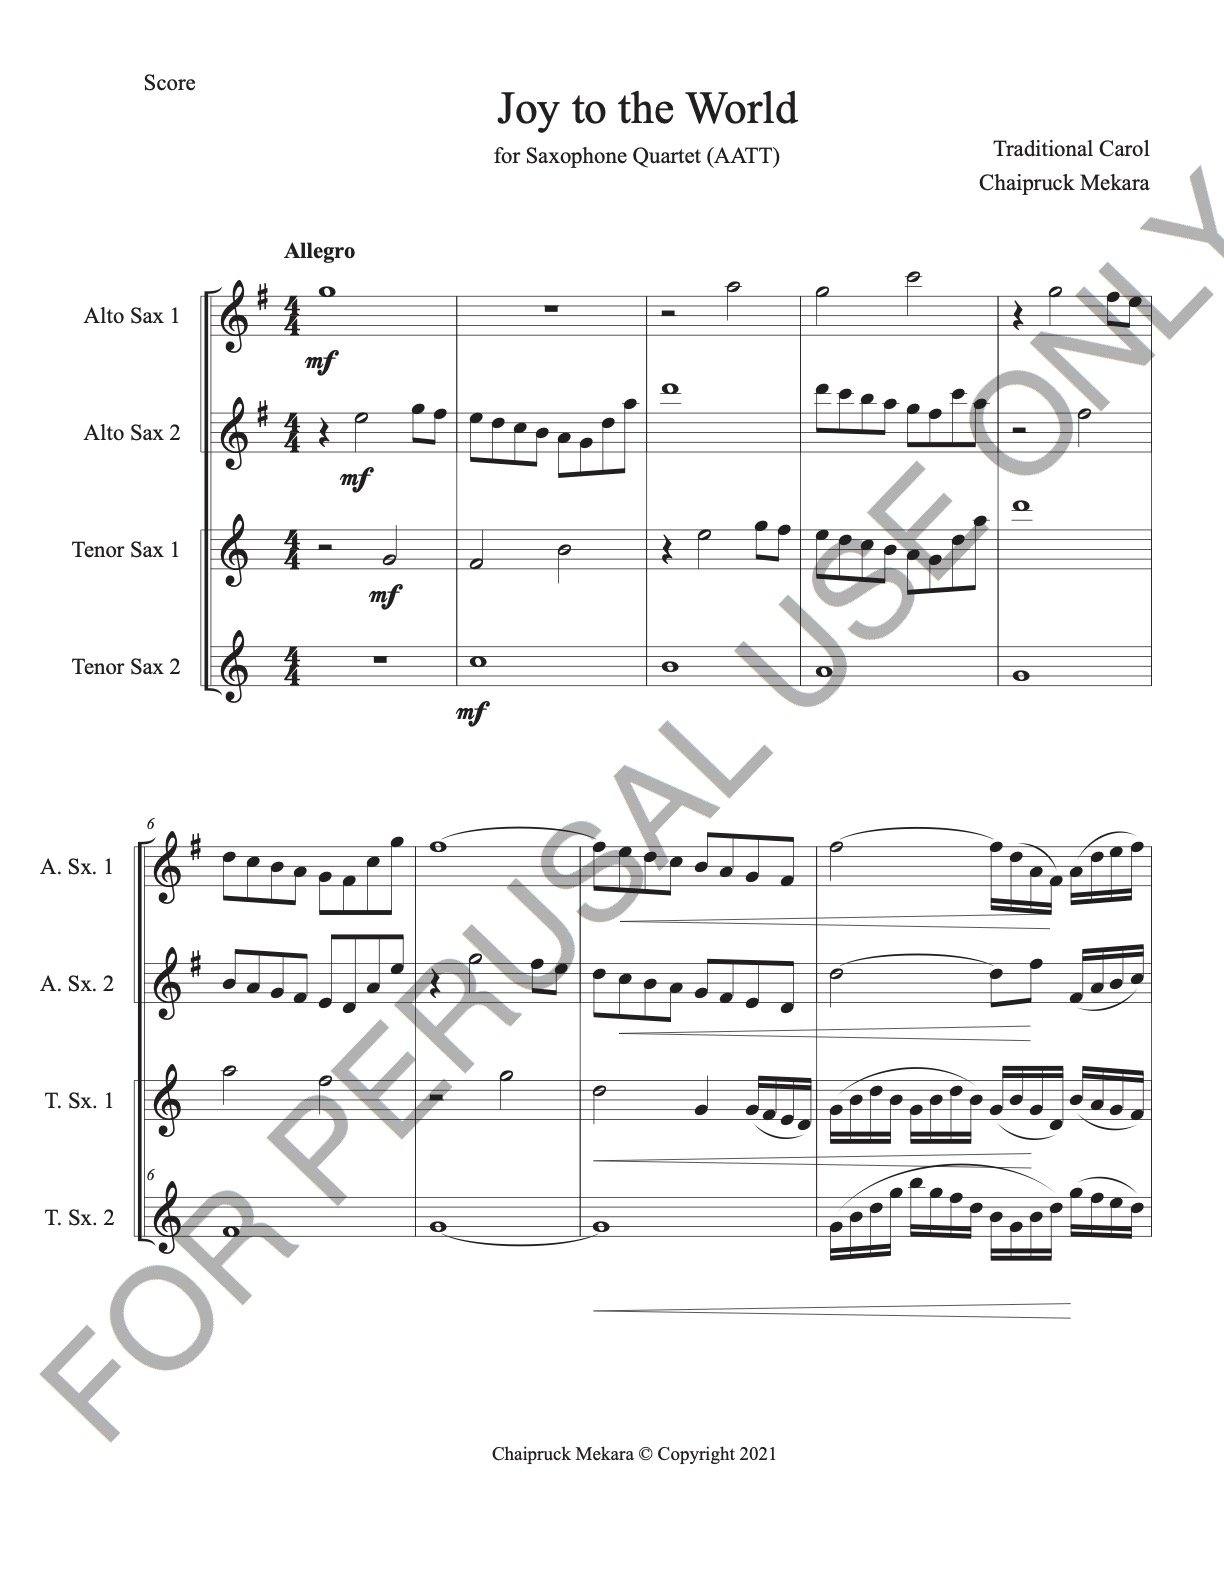 Joy to the World (for Saxophone Quartet-AATT) - ChaipruckMekara